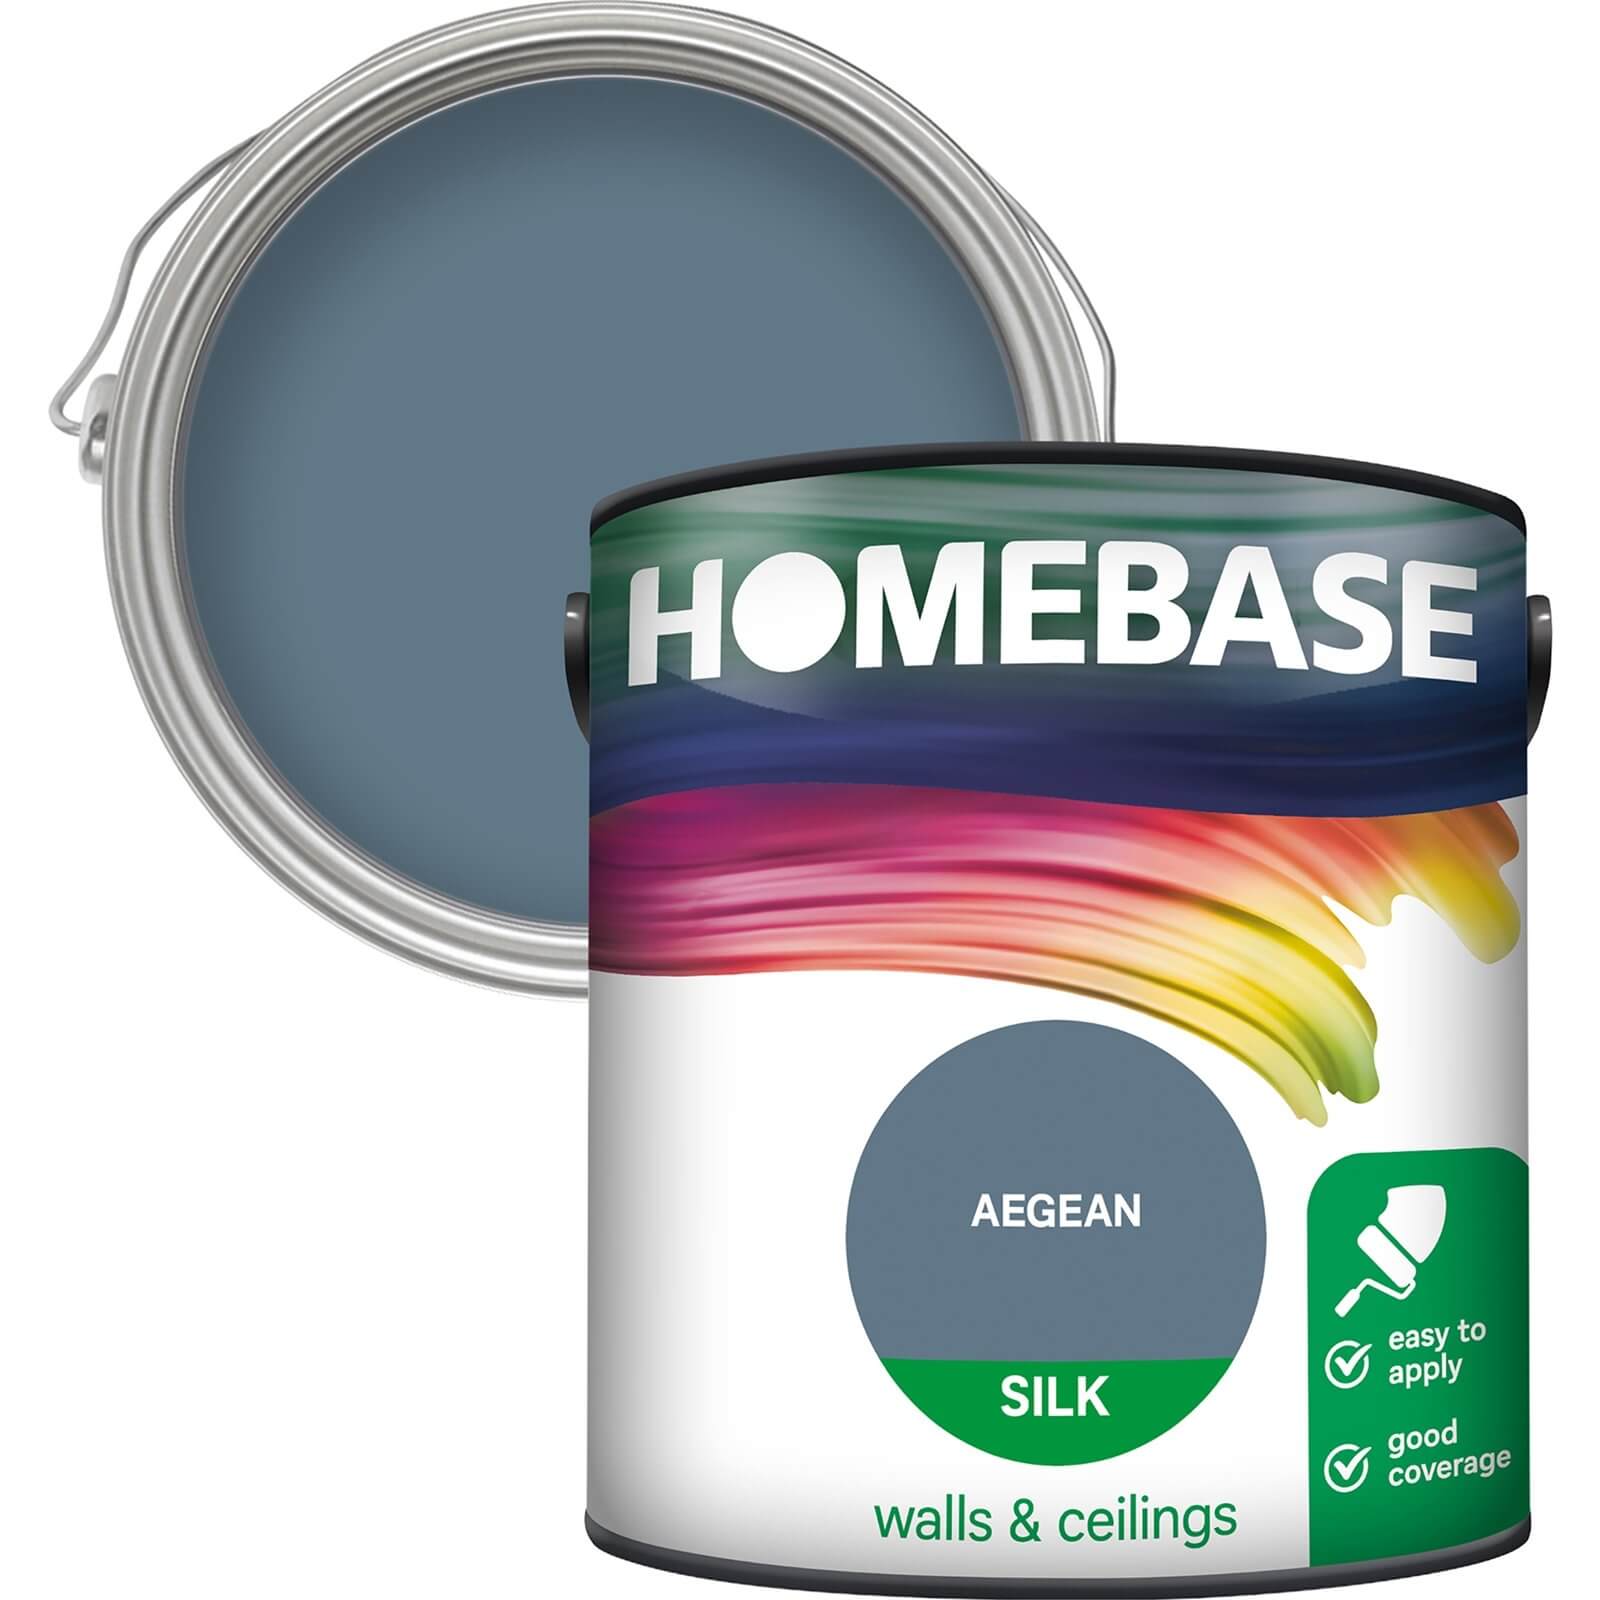 Homebase Silk Emulsion Paint Aegean - 2.5L